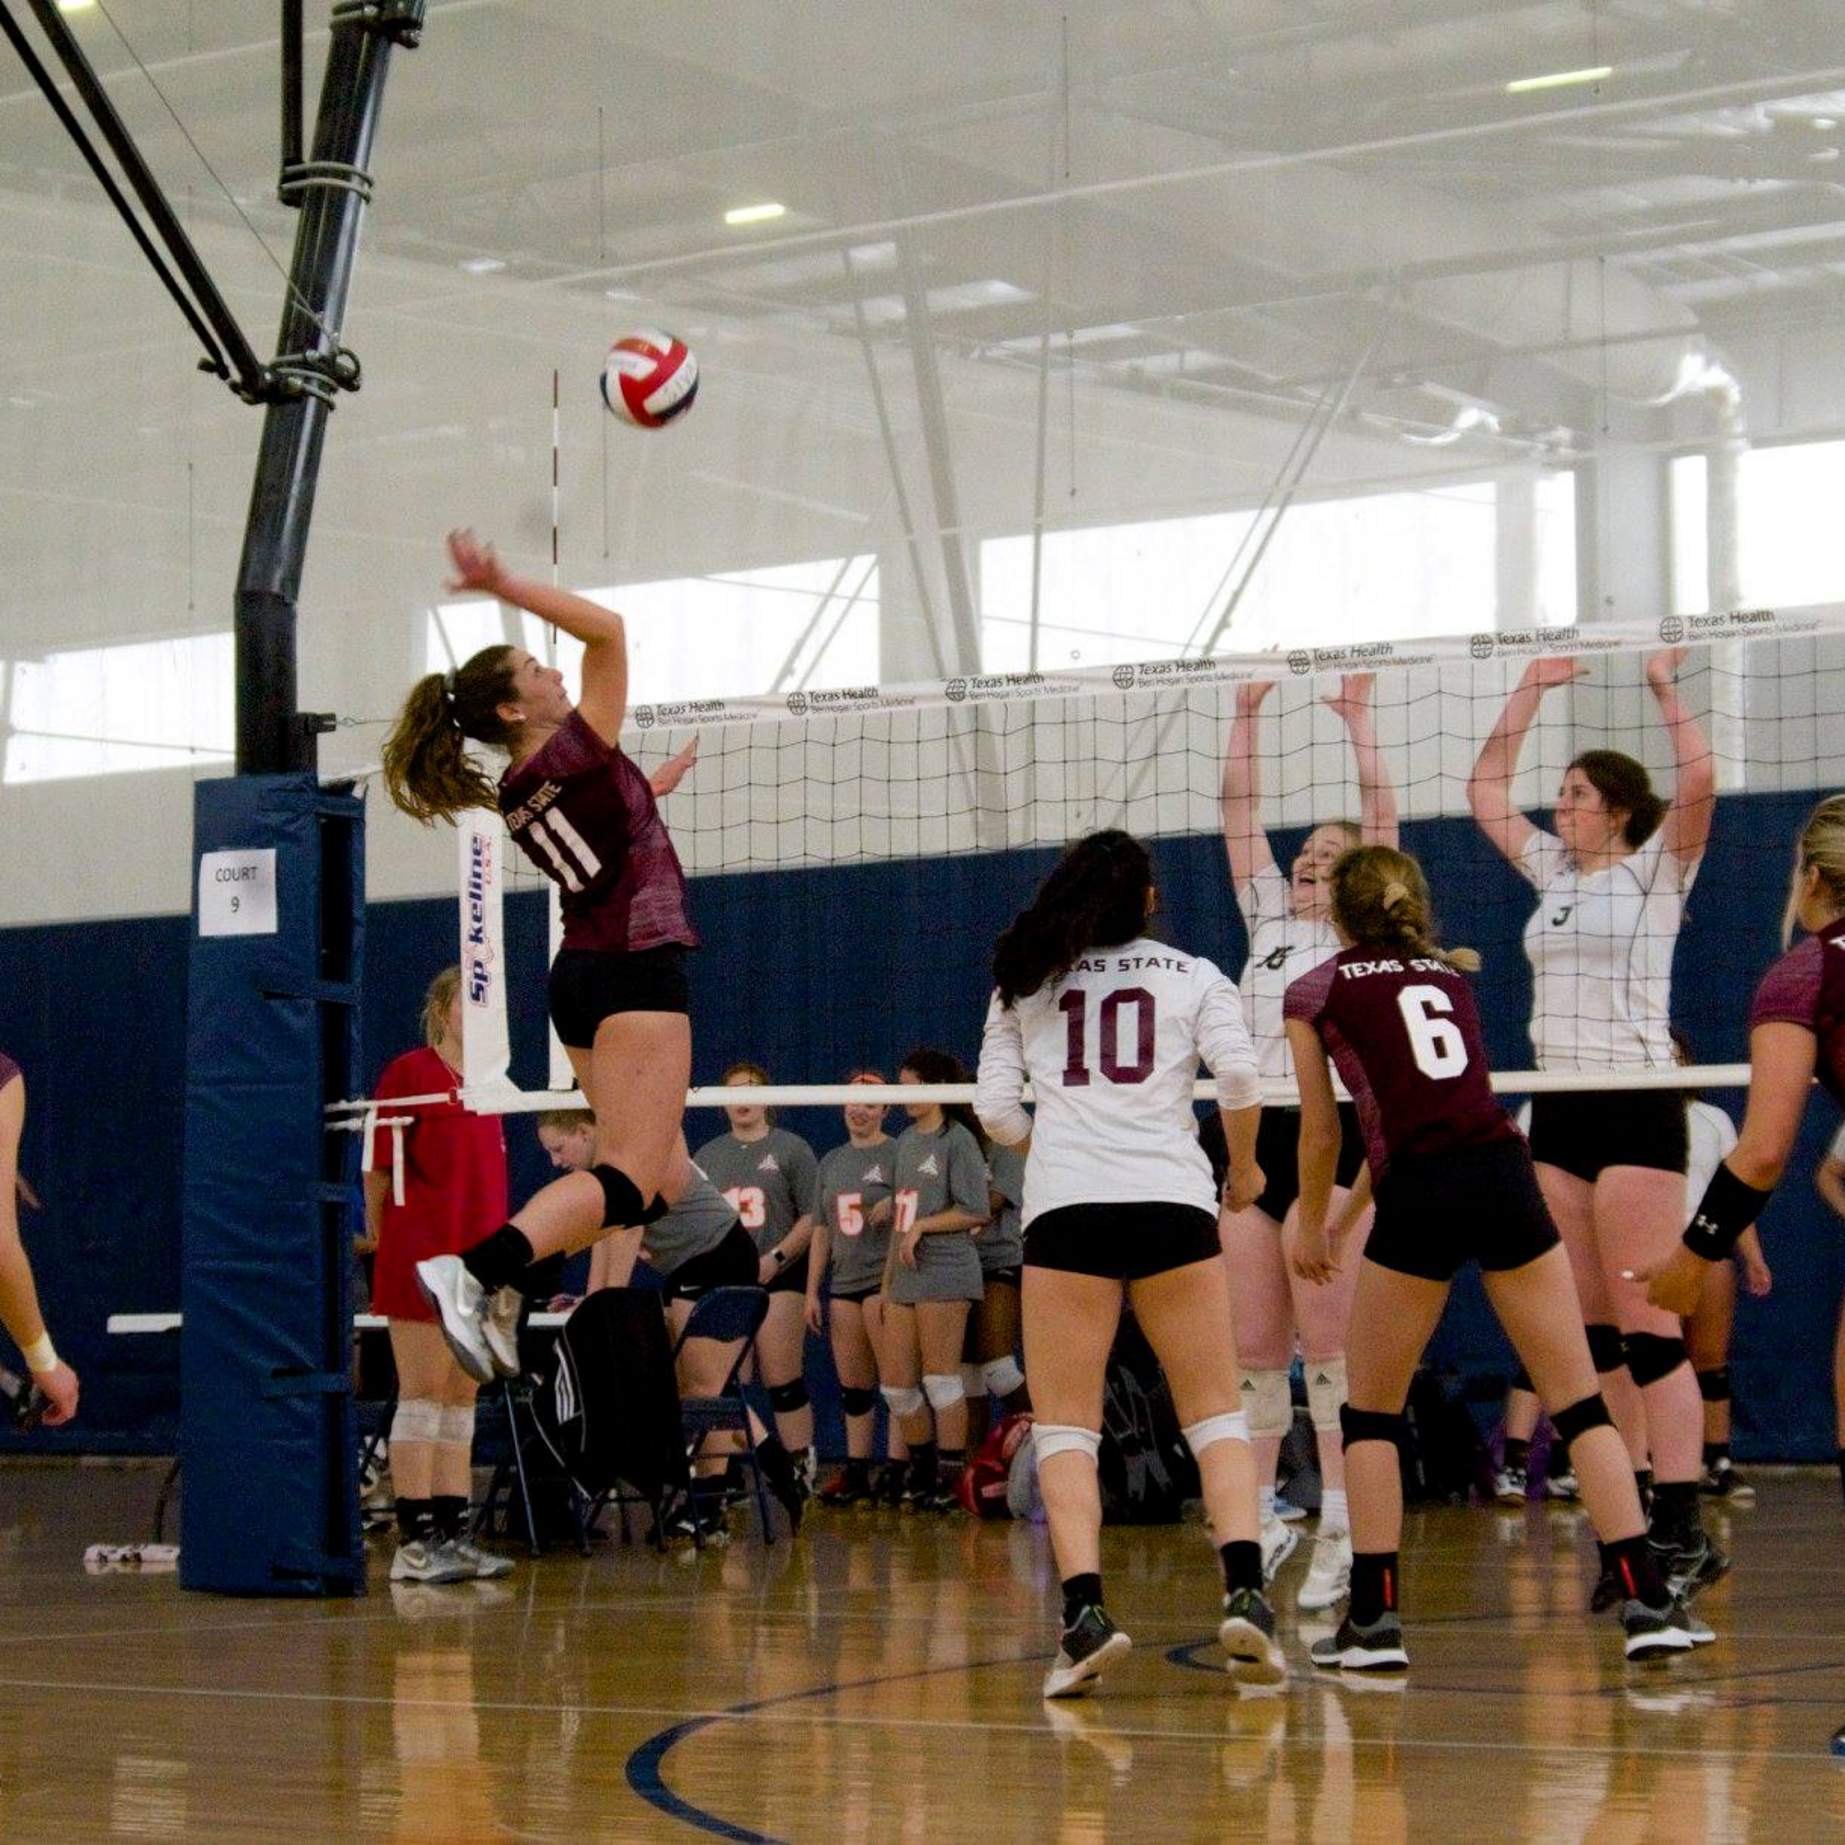 Women's Volleyball player attempts a spike